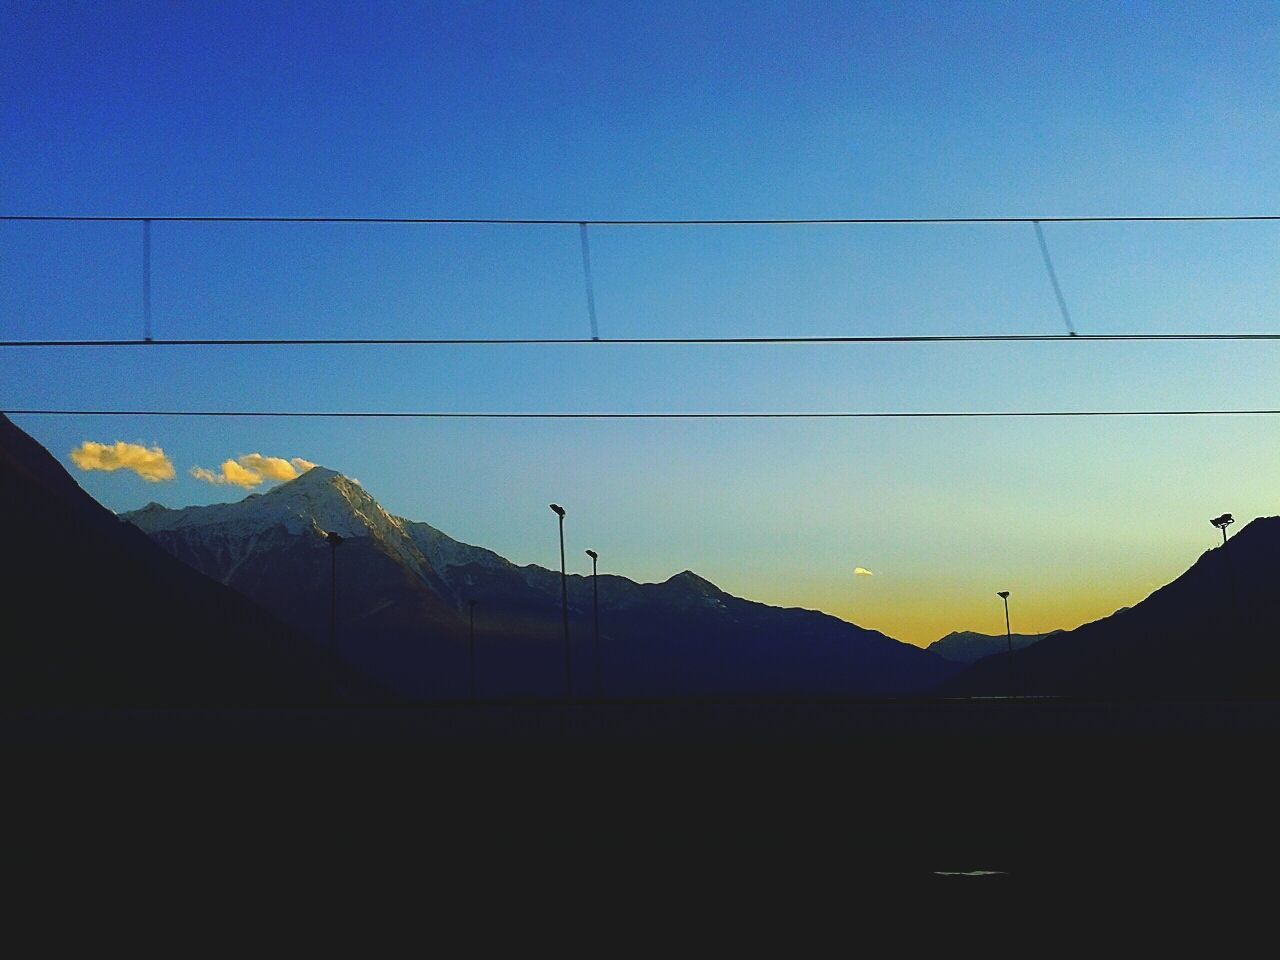 Power cables against mountainous sky